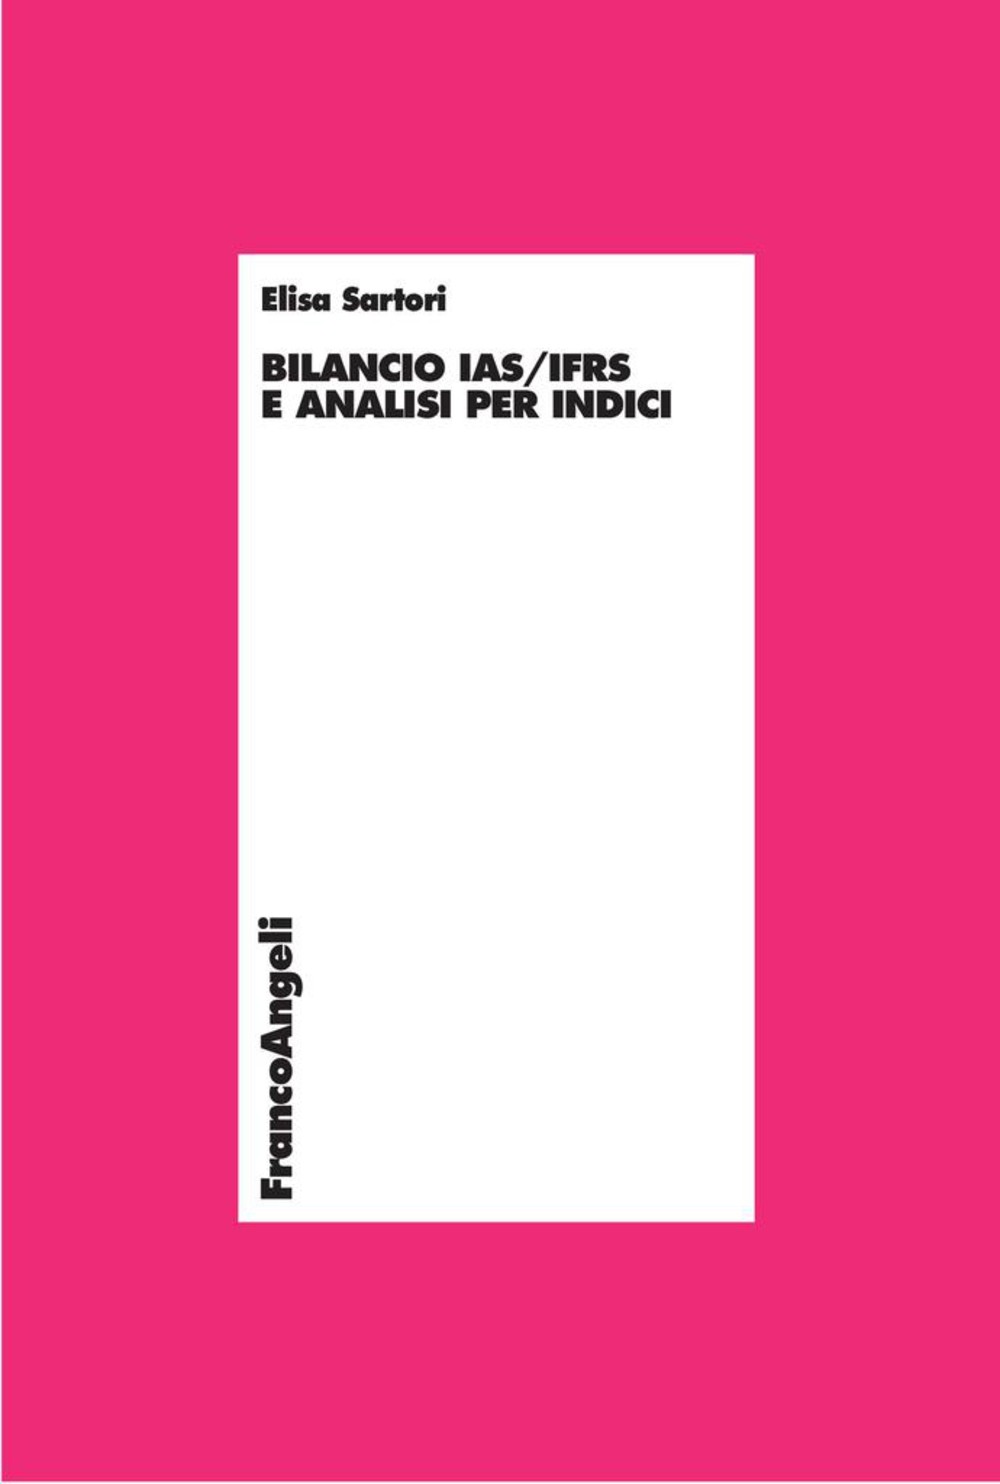 Bilancio IAS/IFRS e analisi per indici - Librerie.coop